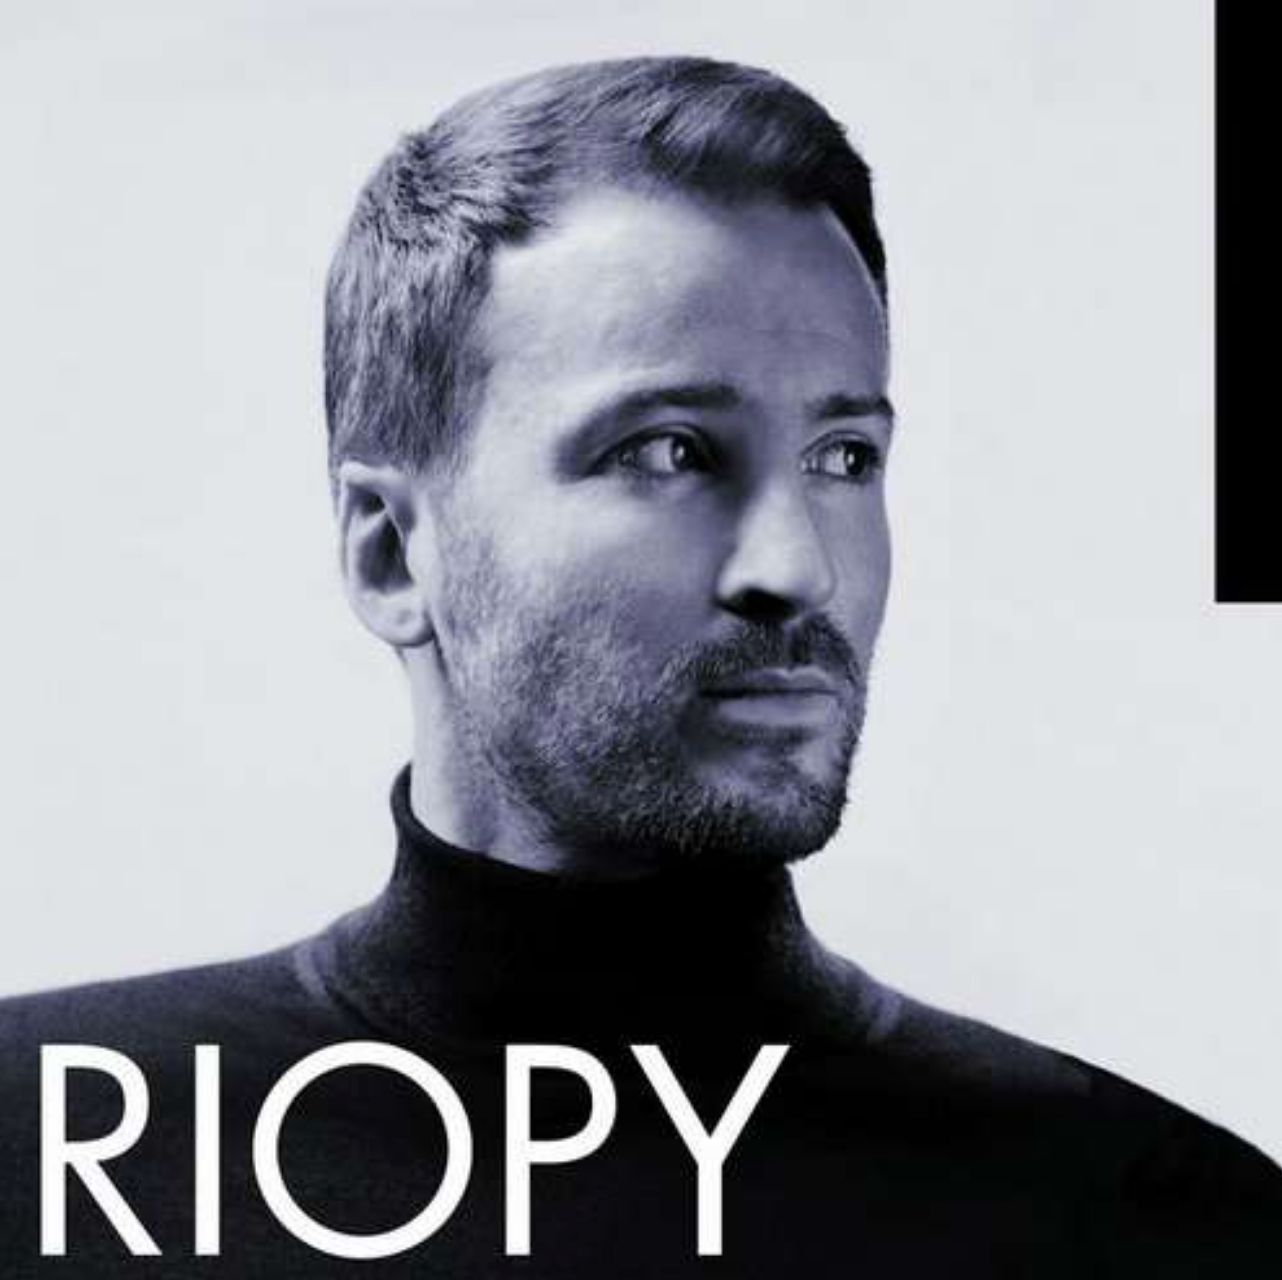 I Love You sheet music from RIOPY album